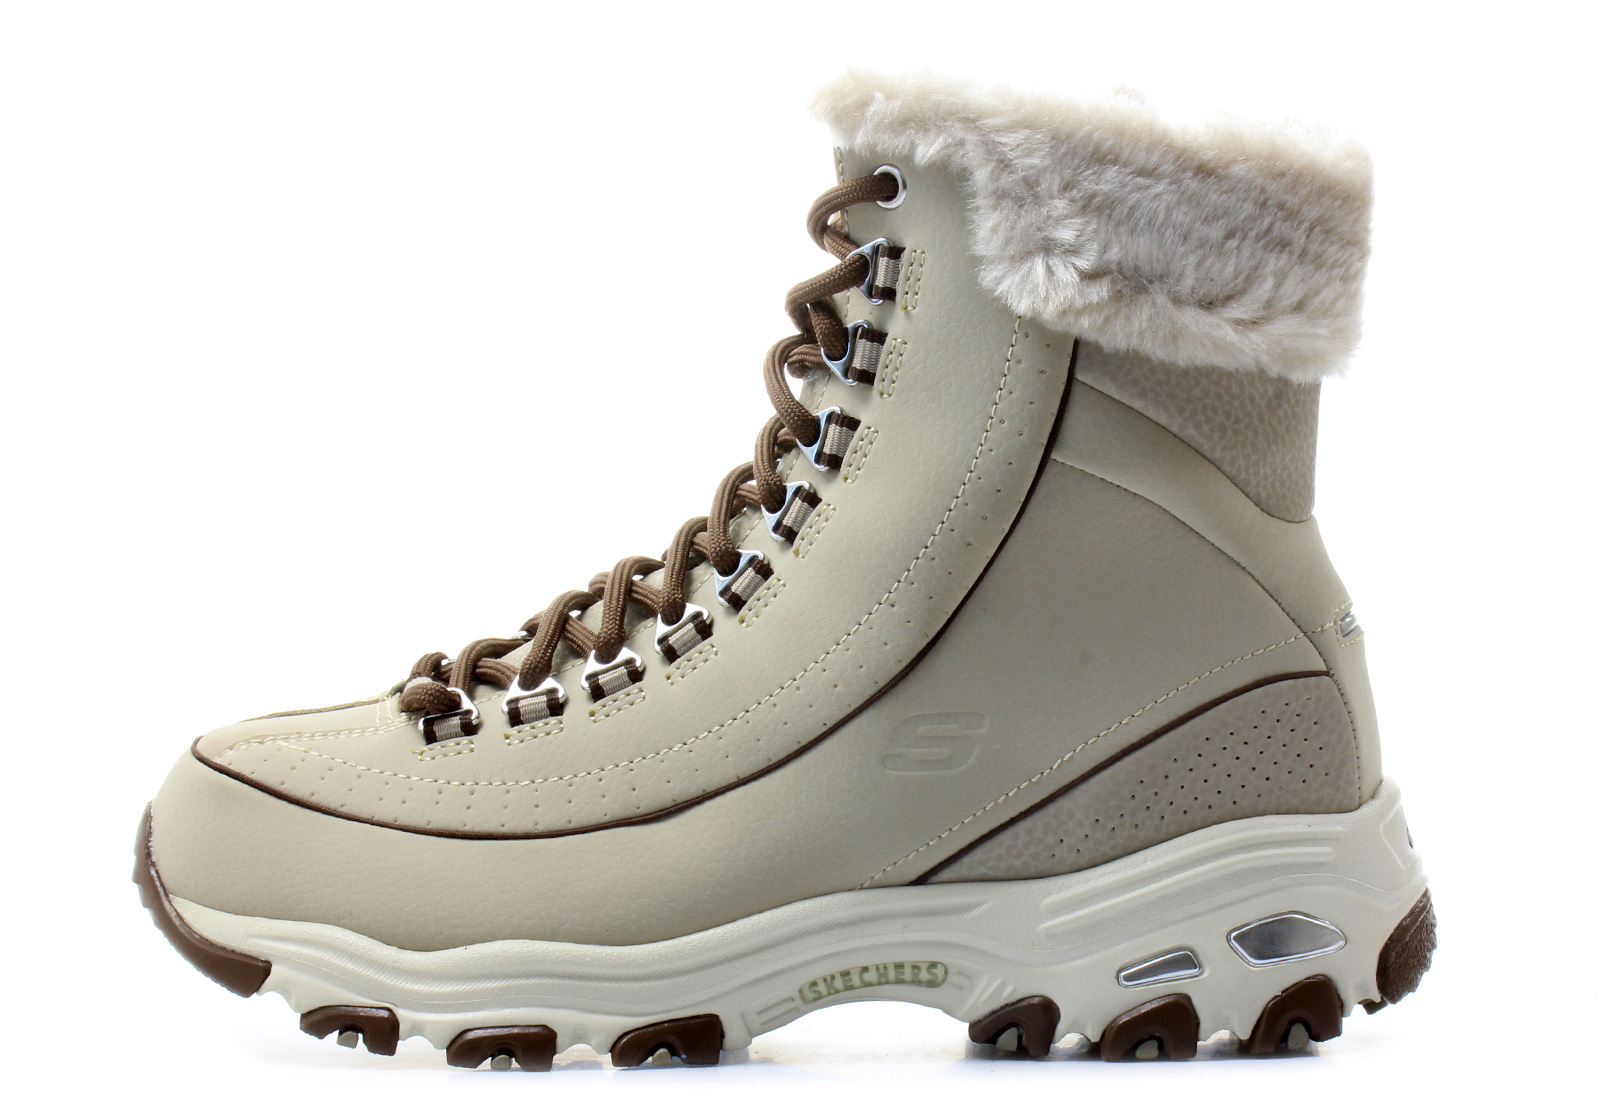 Skechers Shoes - Dlites - Snow Bird - 11619-STBR - Online shop for ...